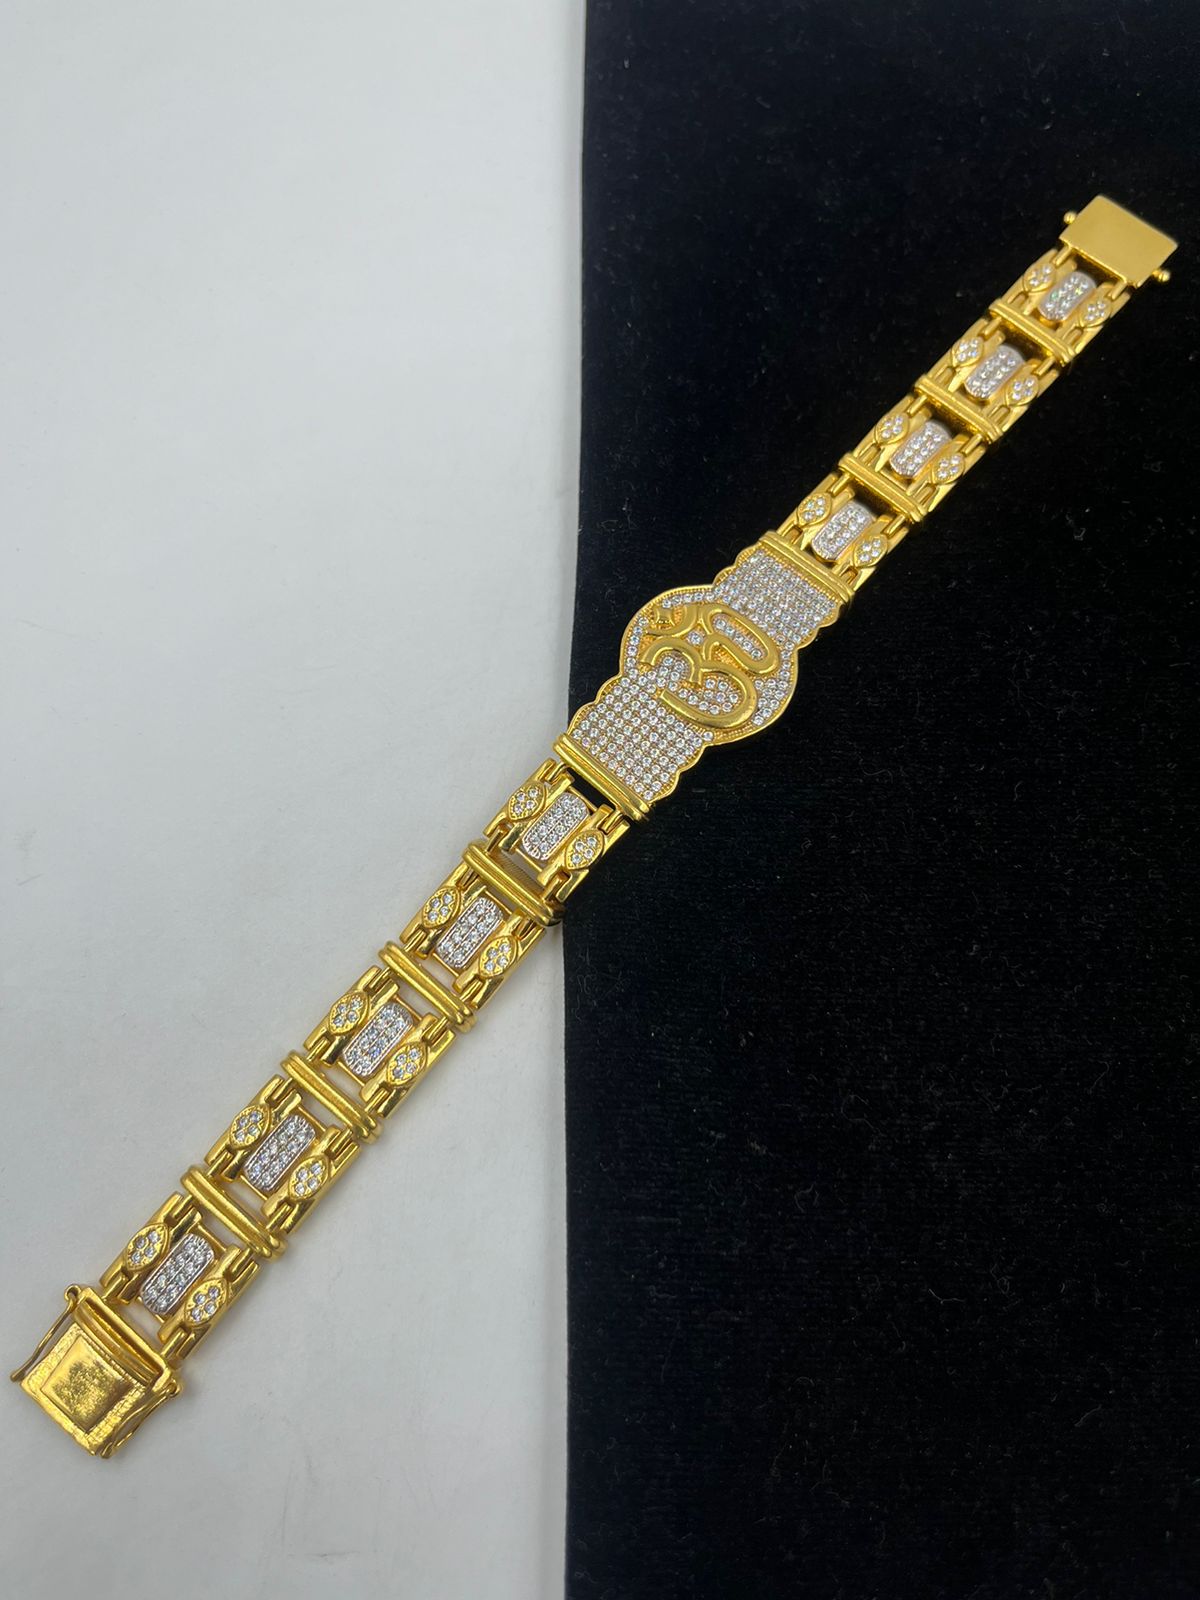 js-016 new gold bracelet designs mens| Alibaba.com